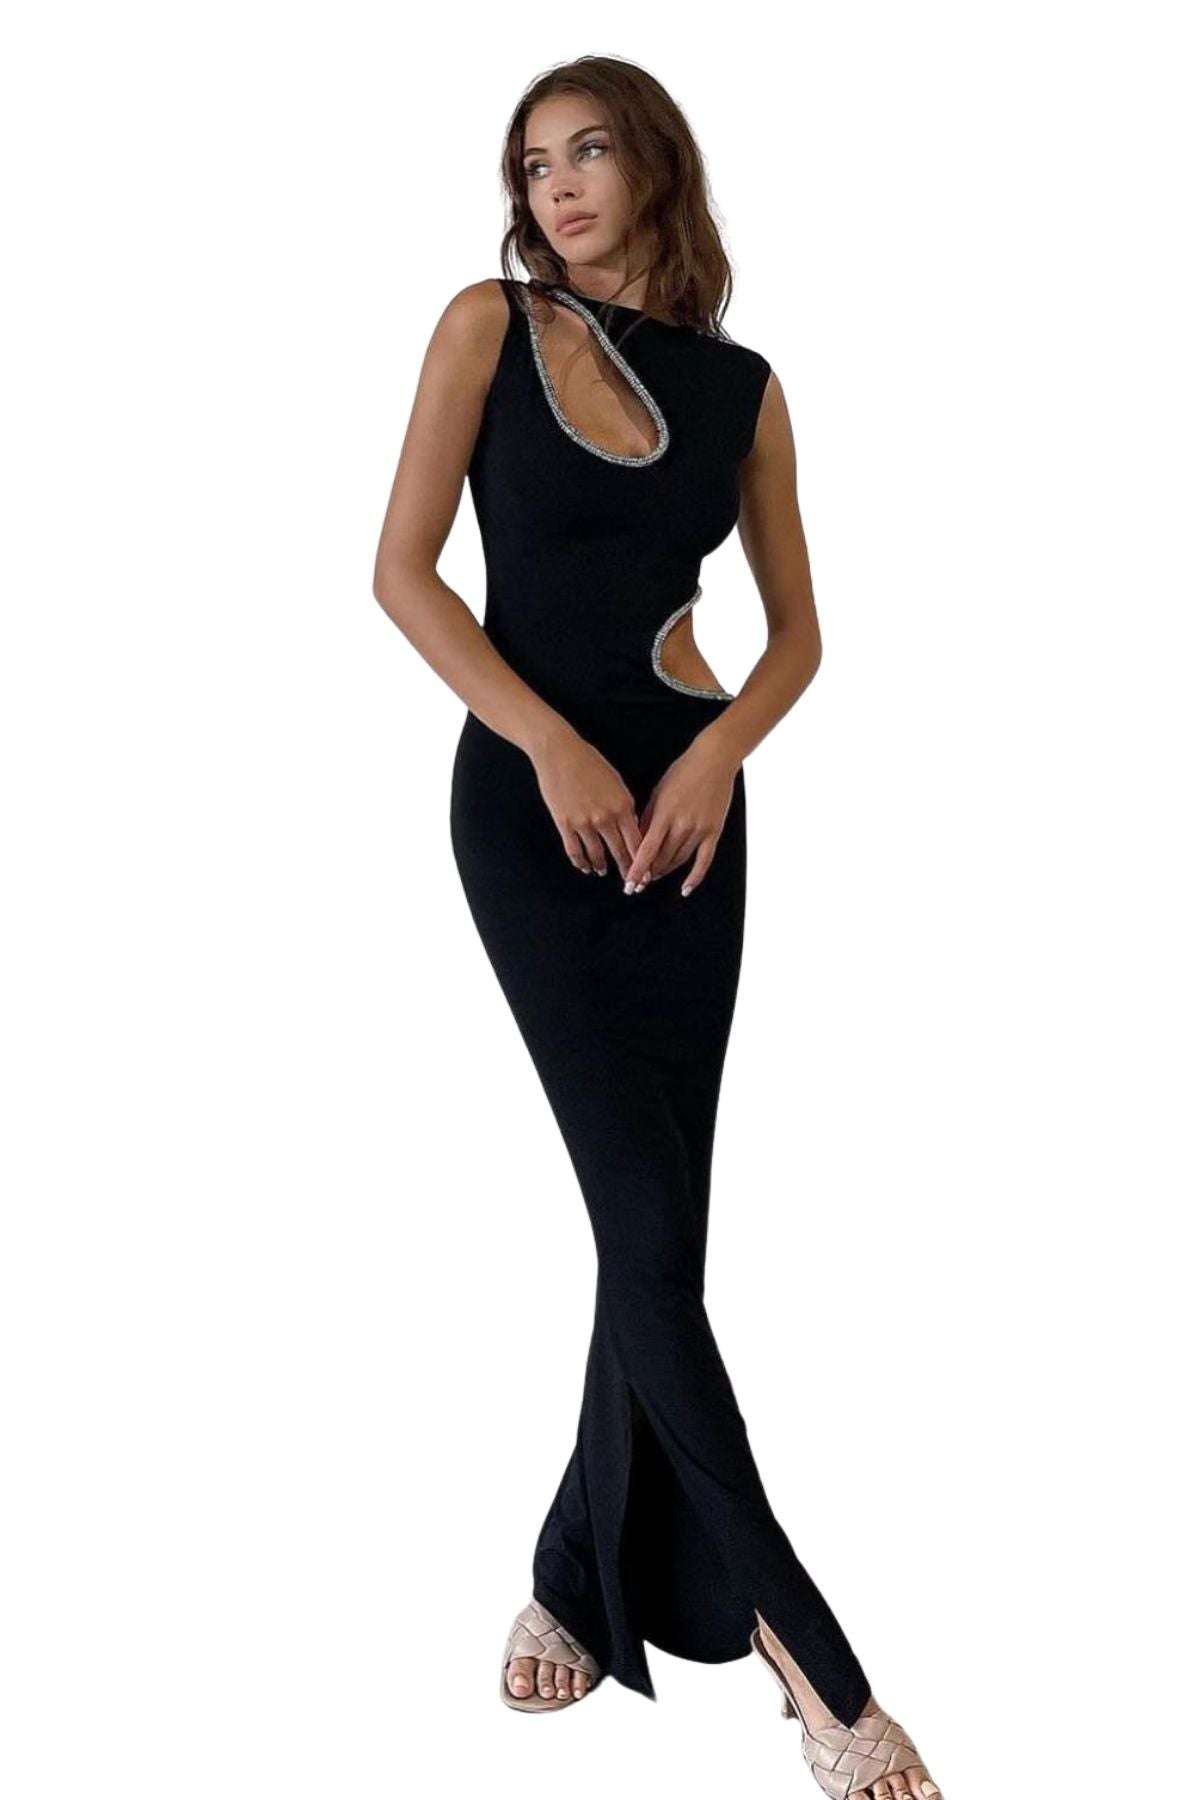 Ivona Skelo IVONA SKELO Vivia Dress (Black)- RRP $389 - rent-ivona-skelo-vivia-dress---rrp-9-hire-dress-for-a-night--30826653.jpg